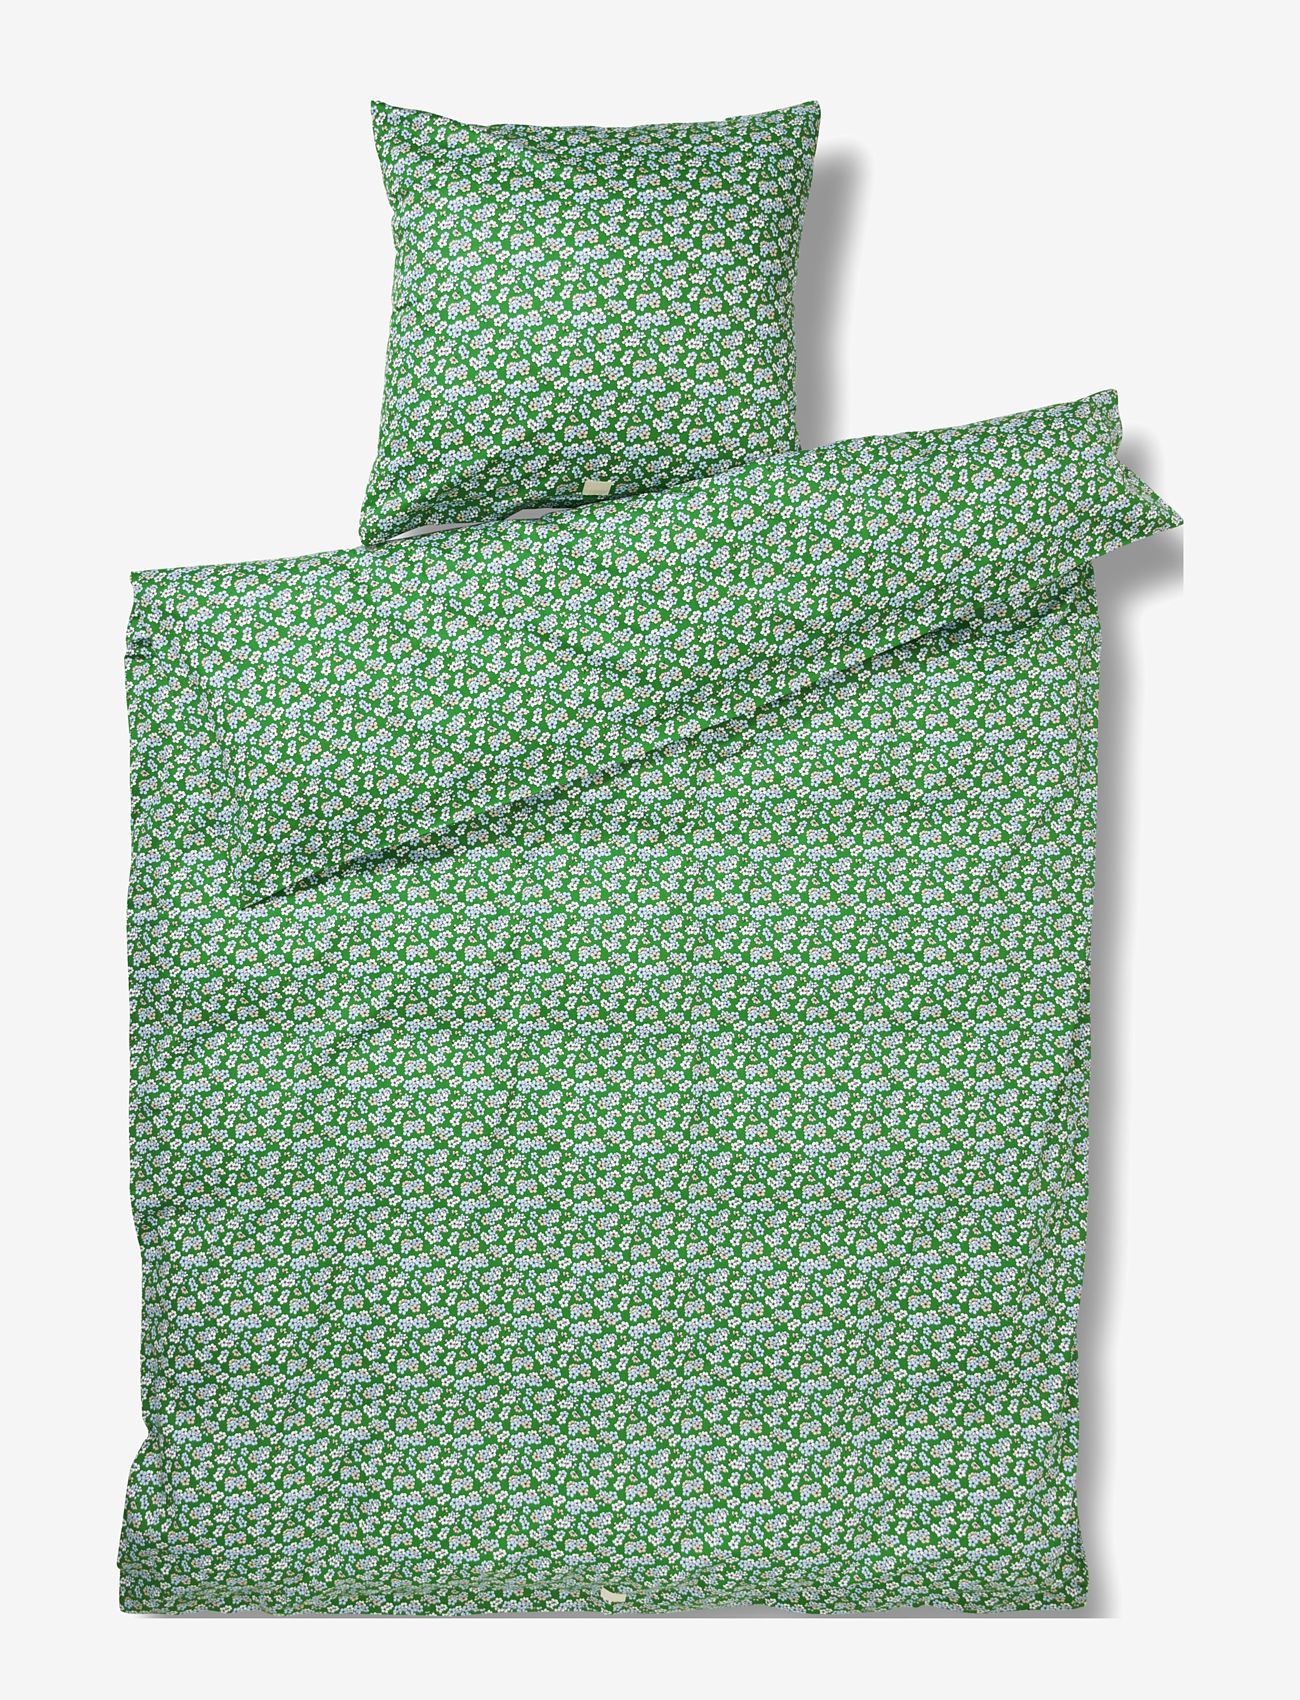 Juna - Pleasantly Bed linen 150x210 cm green - green - 0